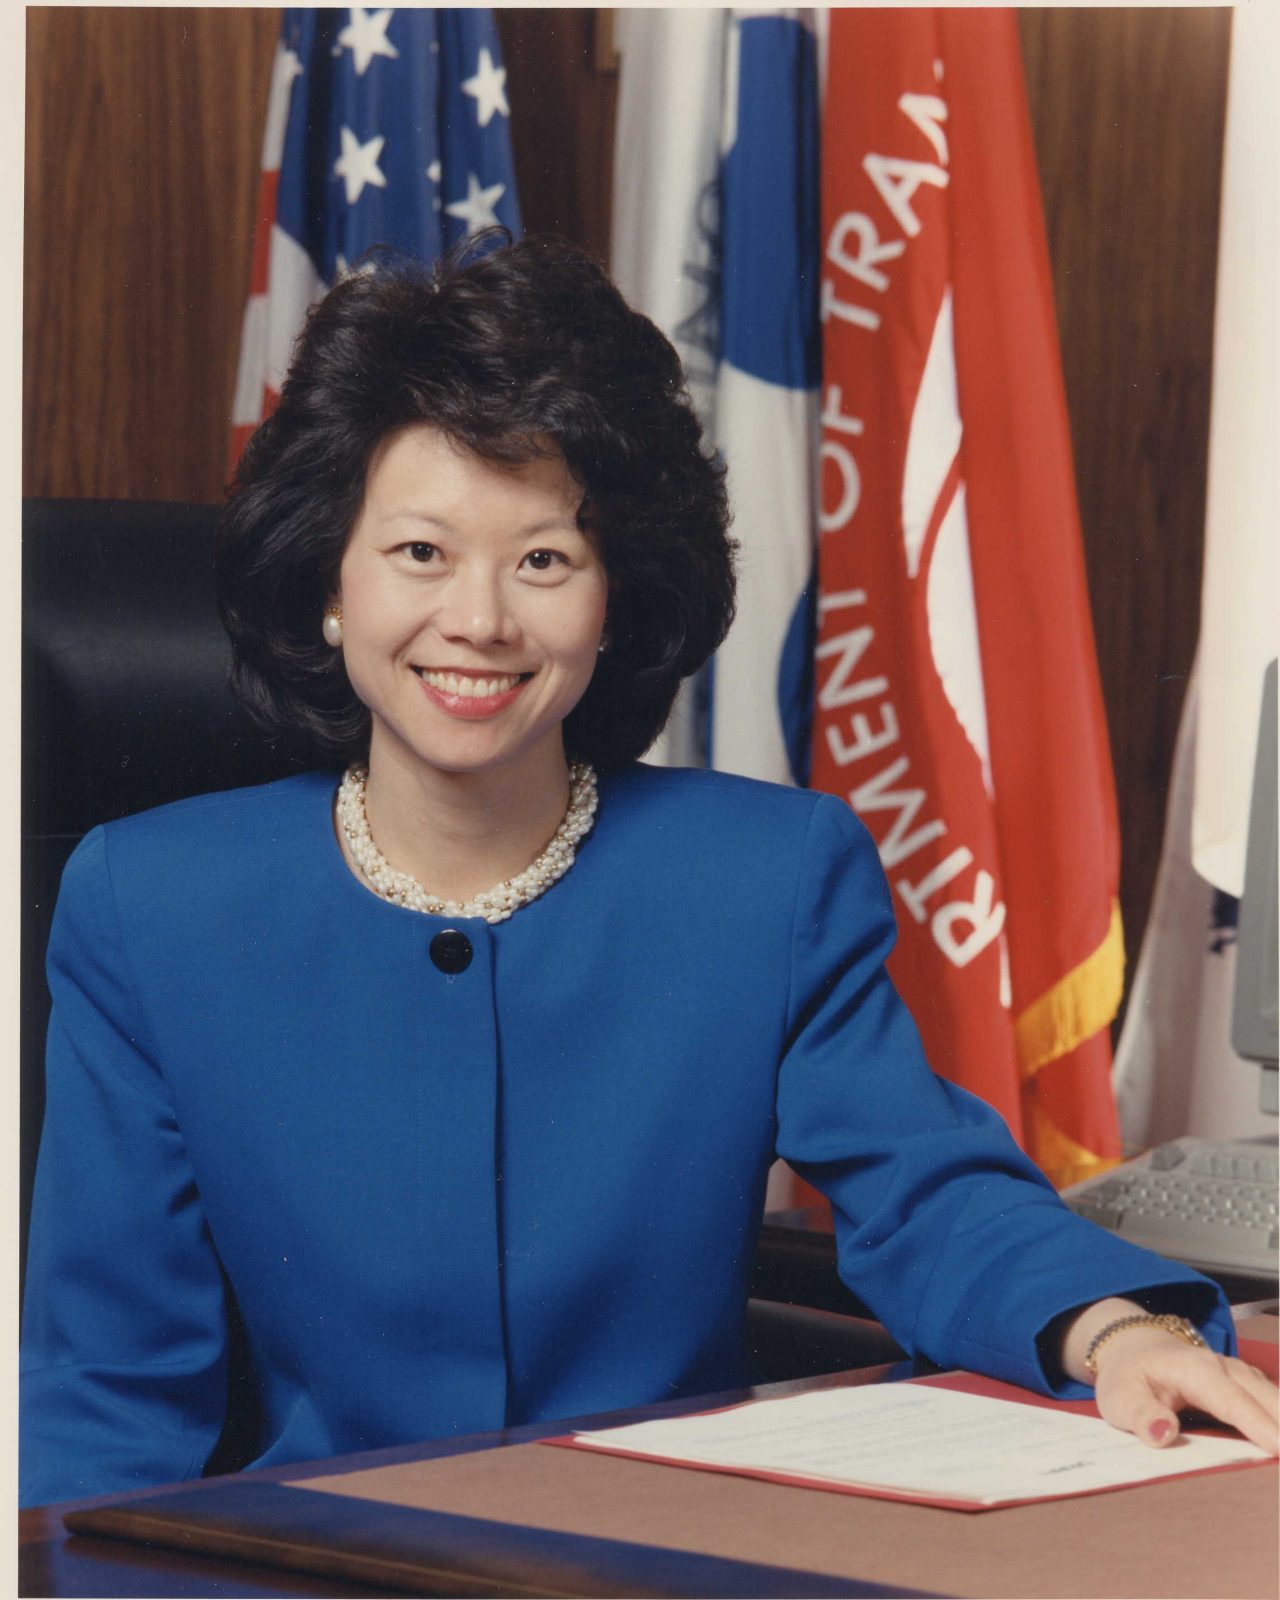 Official portrait of Elaine Chao as U.S. Deputy Secretary of Transportation